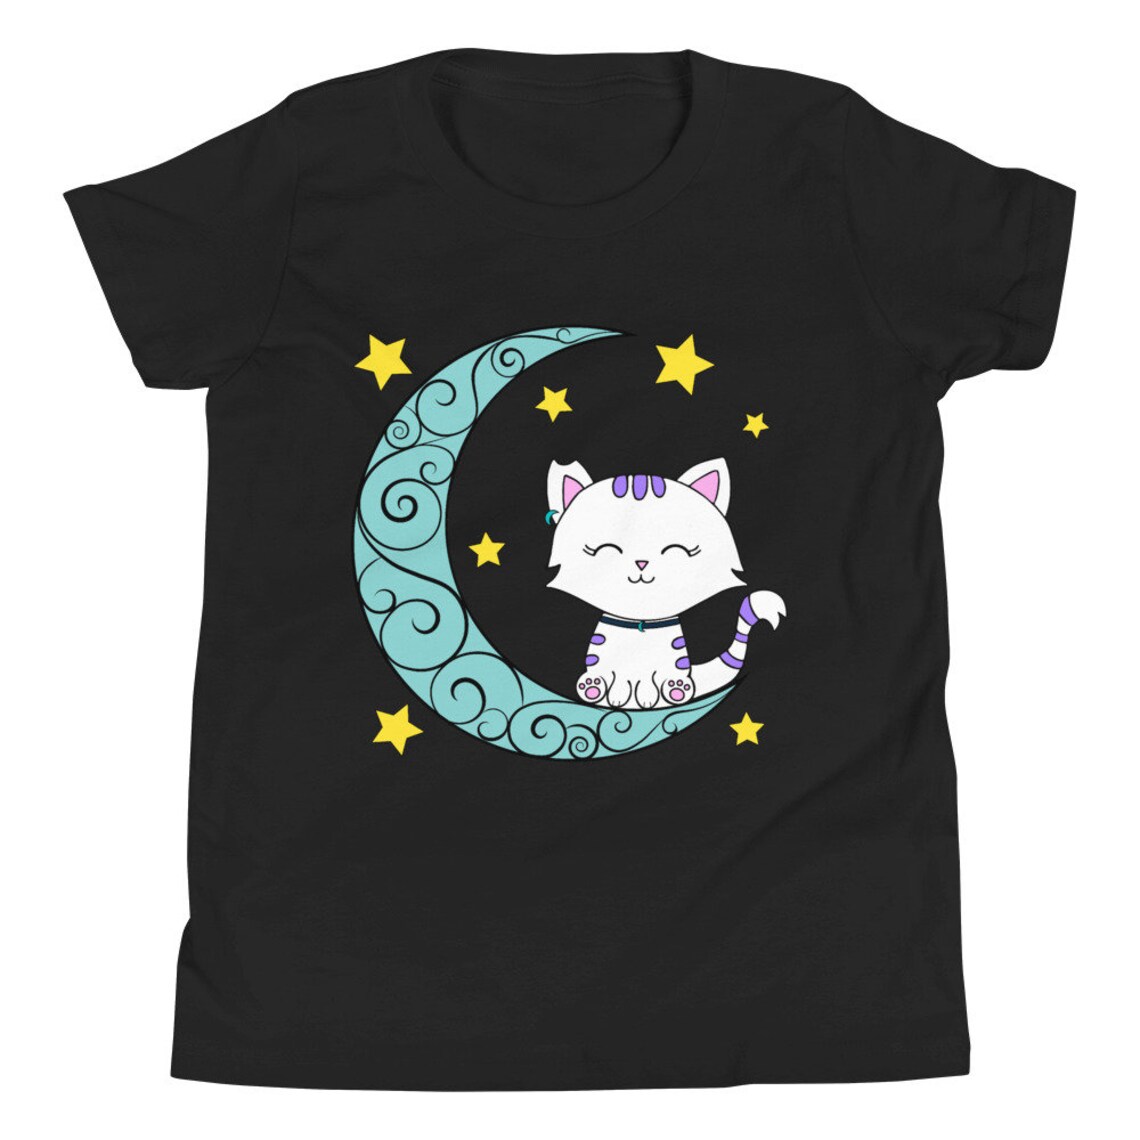 Youth Crescent Moon T-shirt, Girls T-shirt, Boys T-shirt, Cat Sitting ...